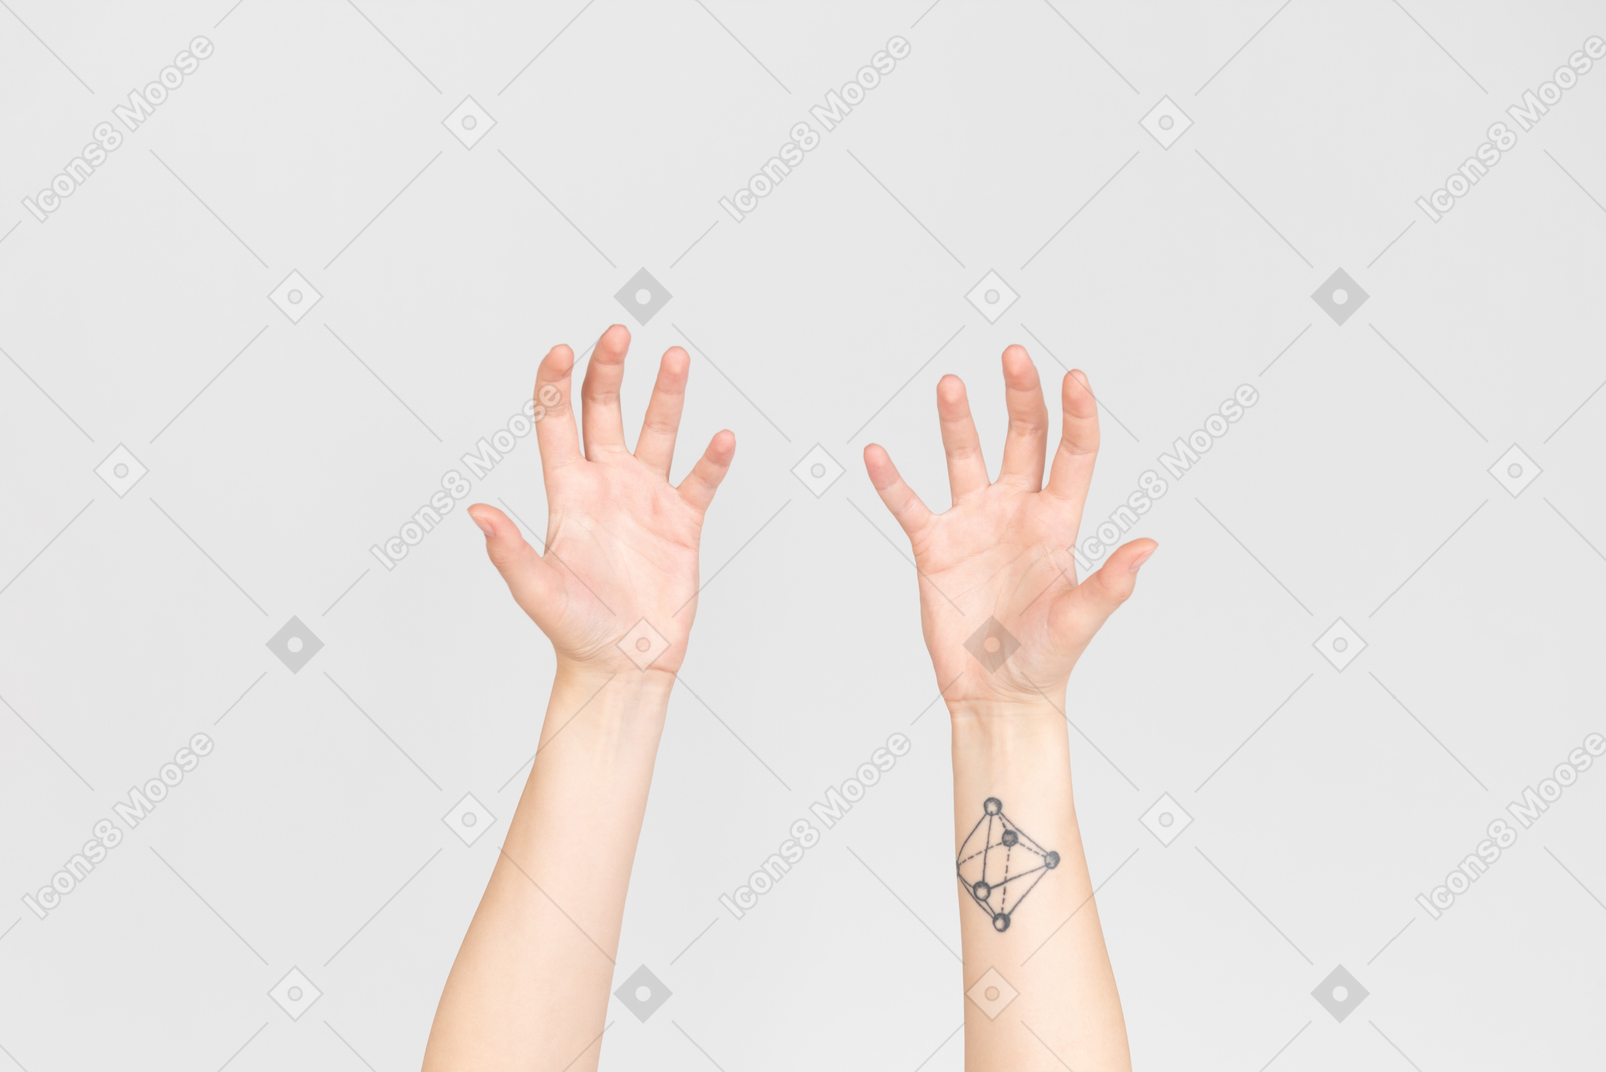 Ладони женских рук показаны на камеру